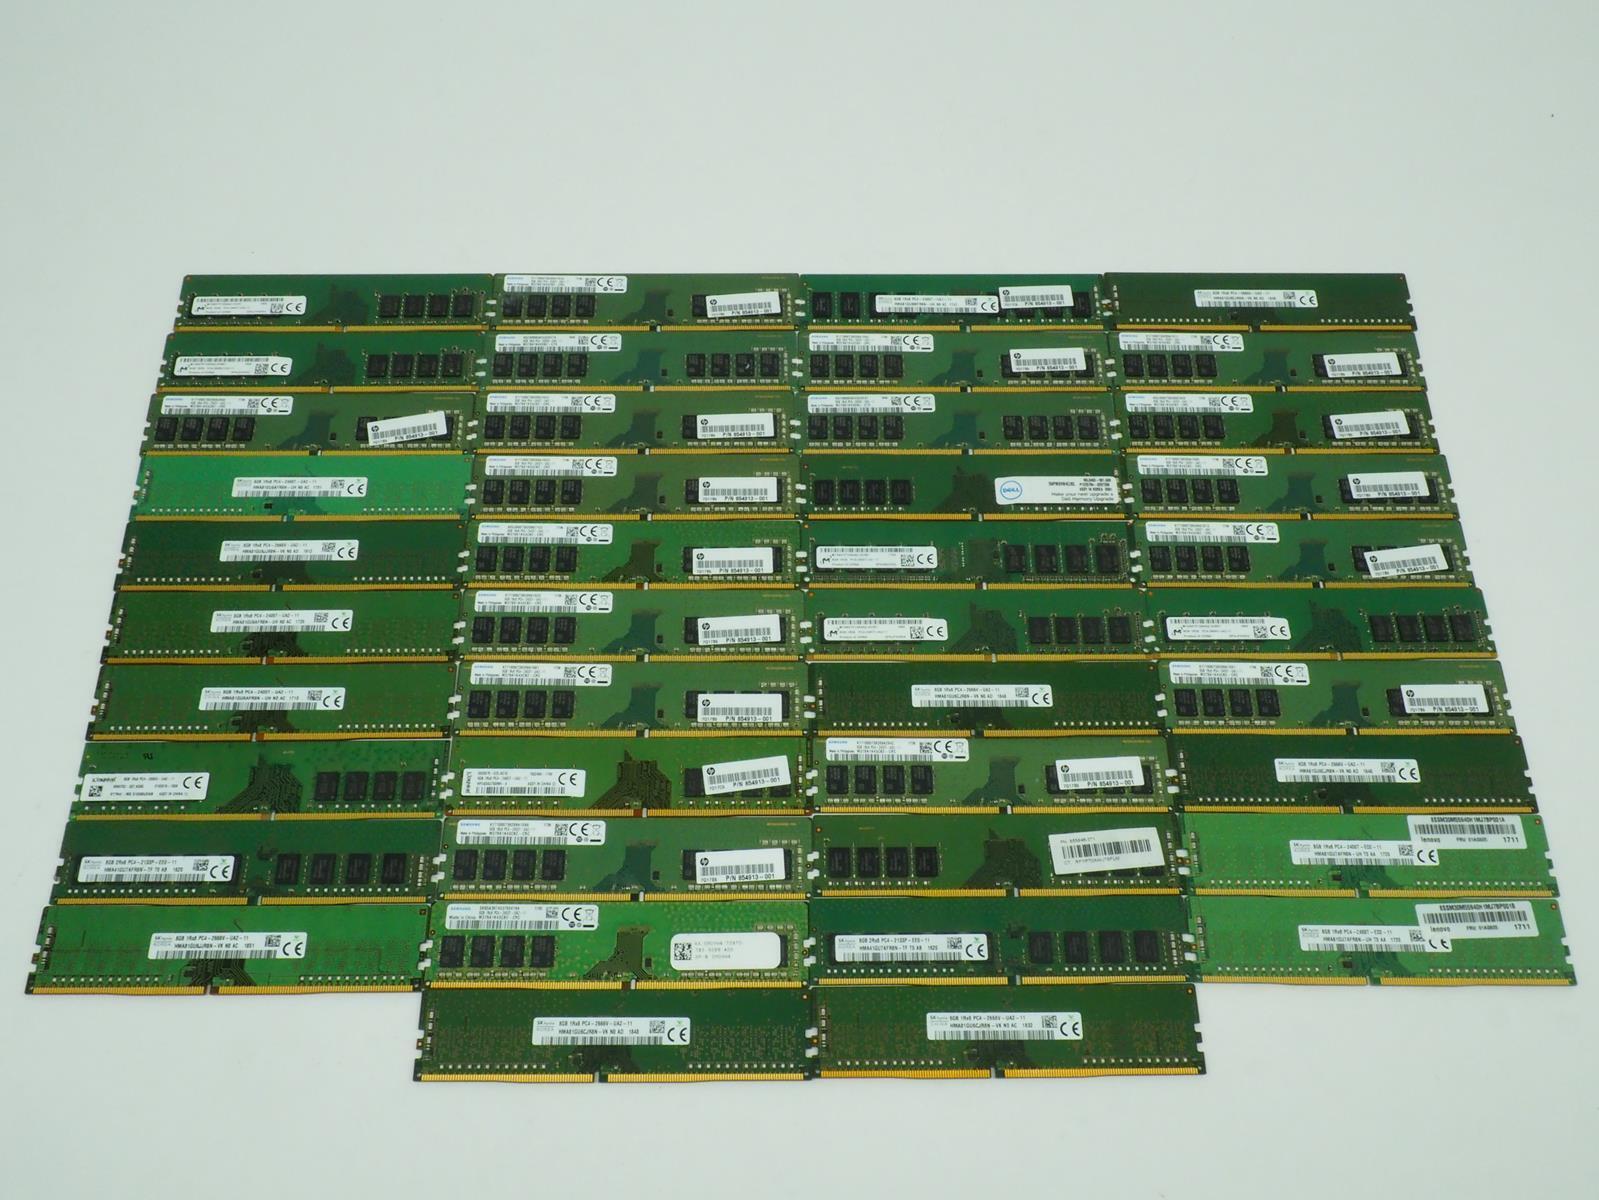 LOT OF 42 8GB PC4 DESKTOP RAM (Samsung, Hynix, etc.) *Mixed Brand* -Tested